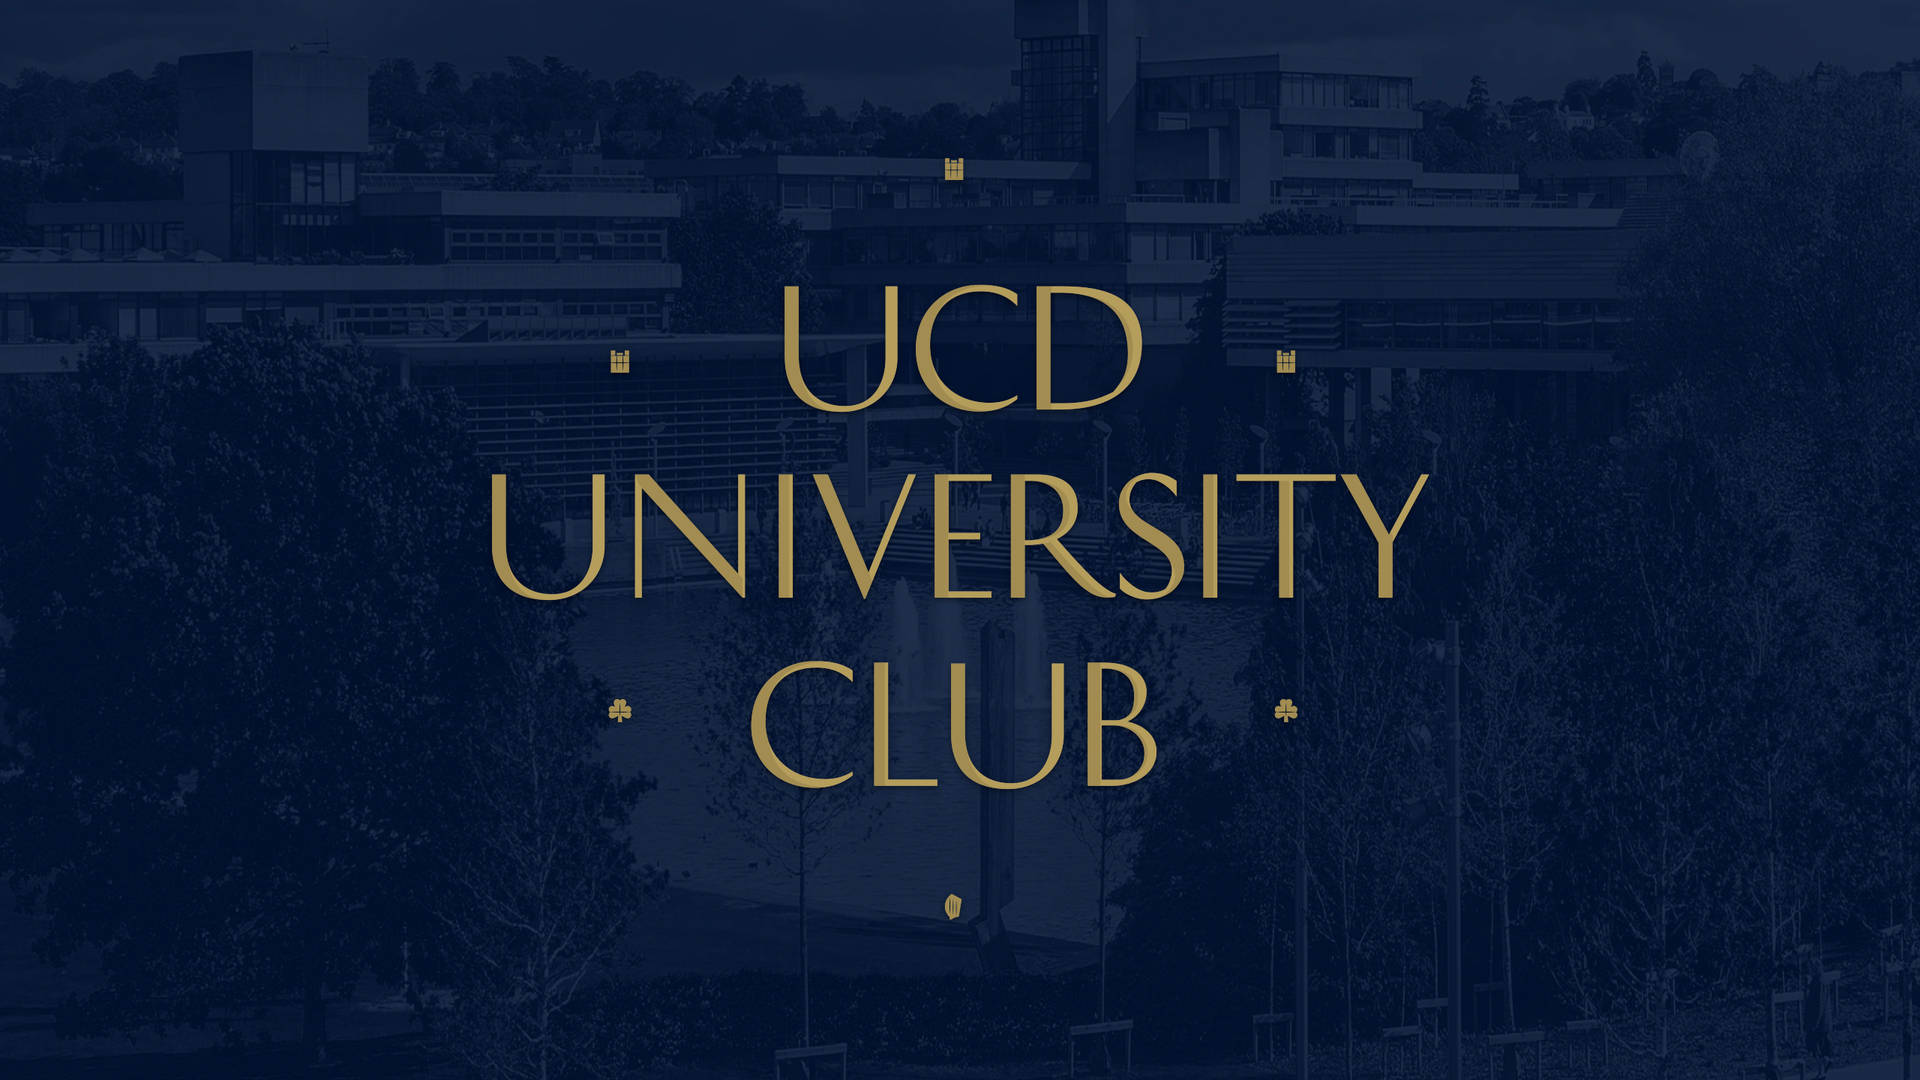 Ucd University Club Wallpaper